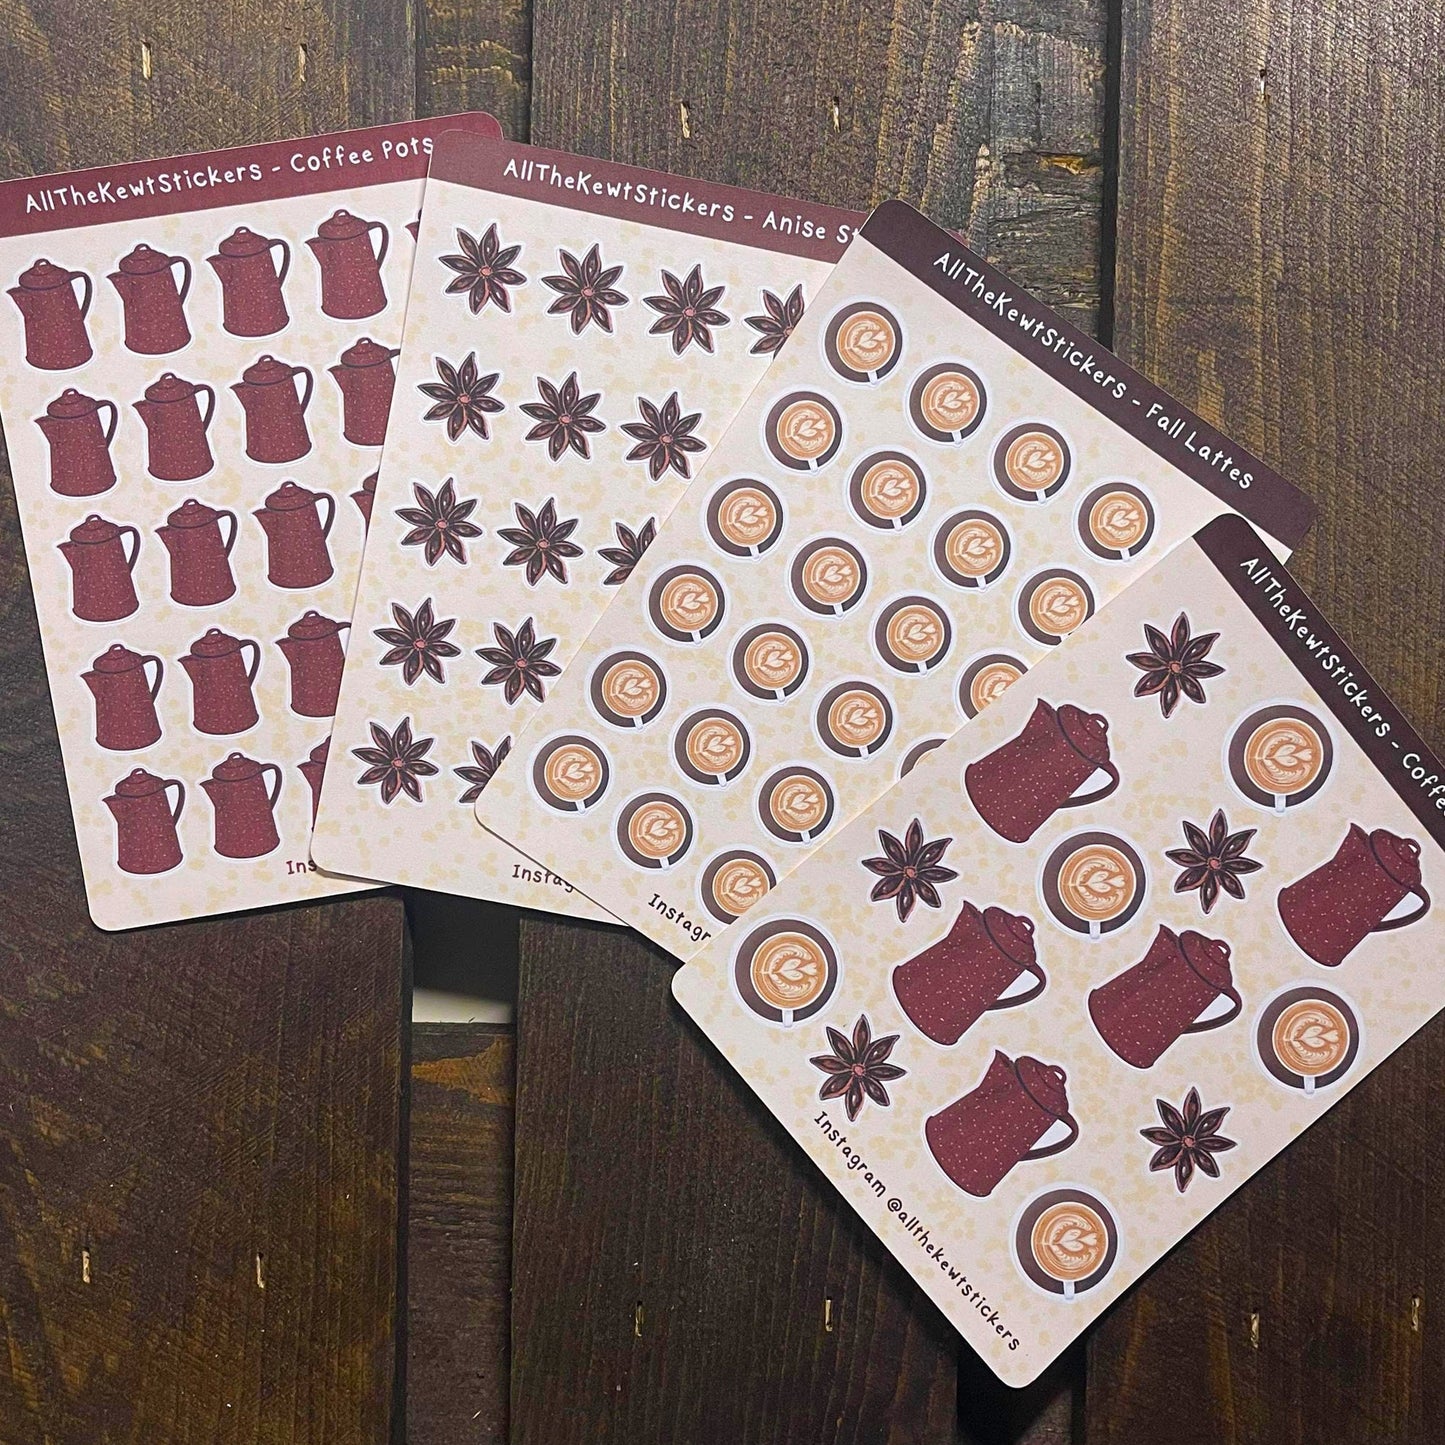 Kawaii Planner Stickers, Autumn Bullet Journal Stickers, Kawaii Sticker, Coffee and Spice Stickers, Fall Theme, Coffee Pot, Anise & Latte